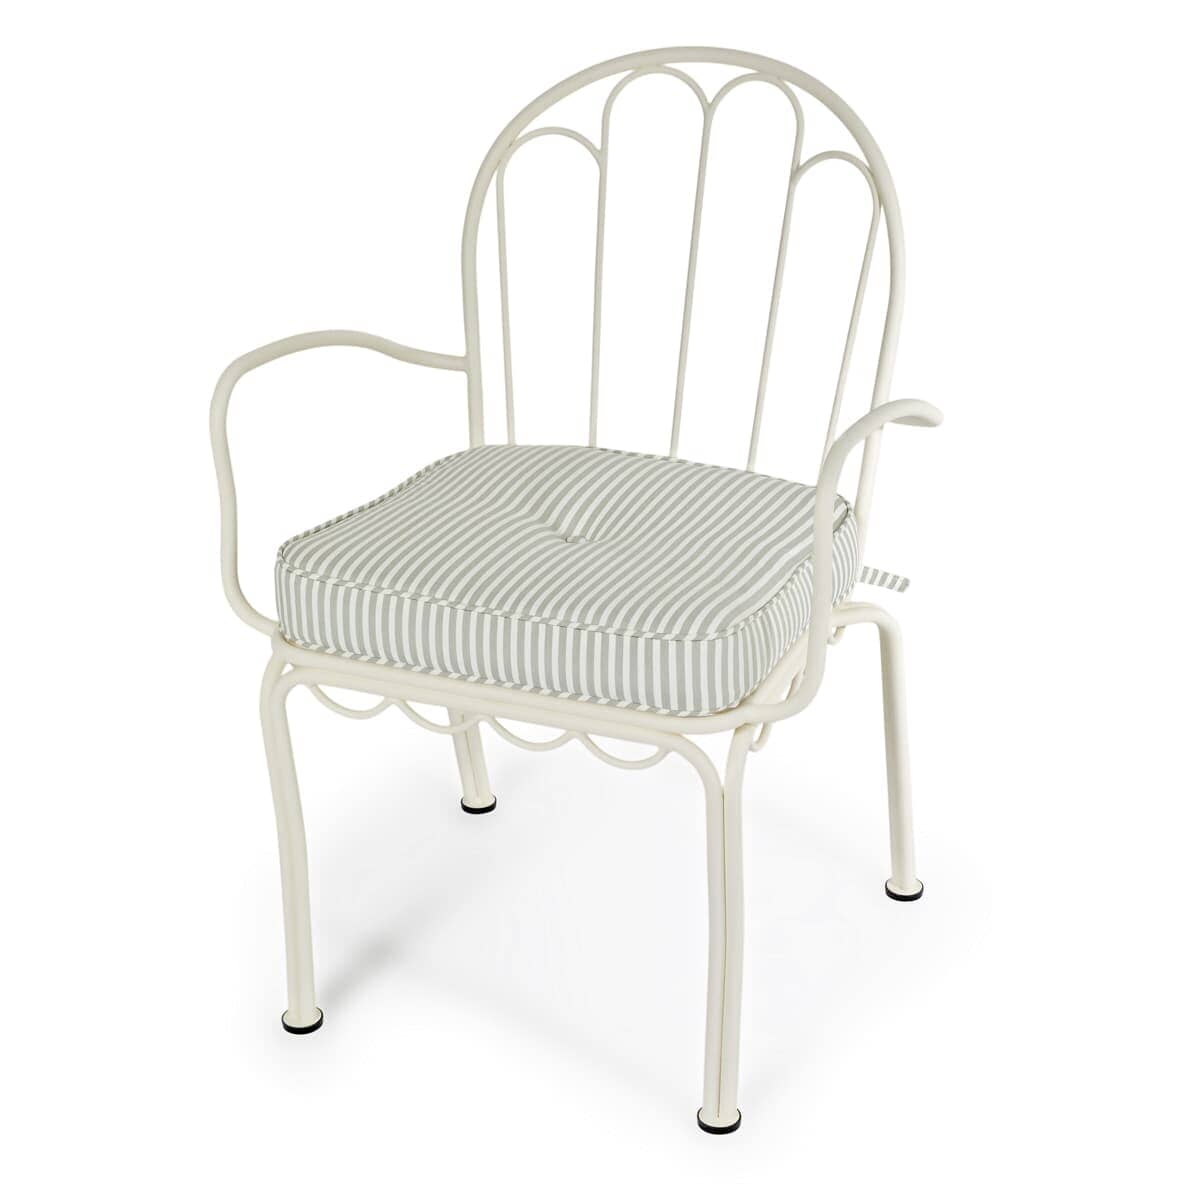 Studio image of laurens sage chair cushion